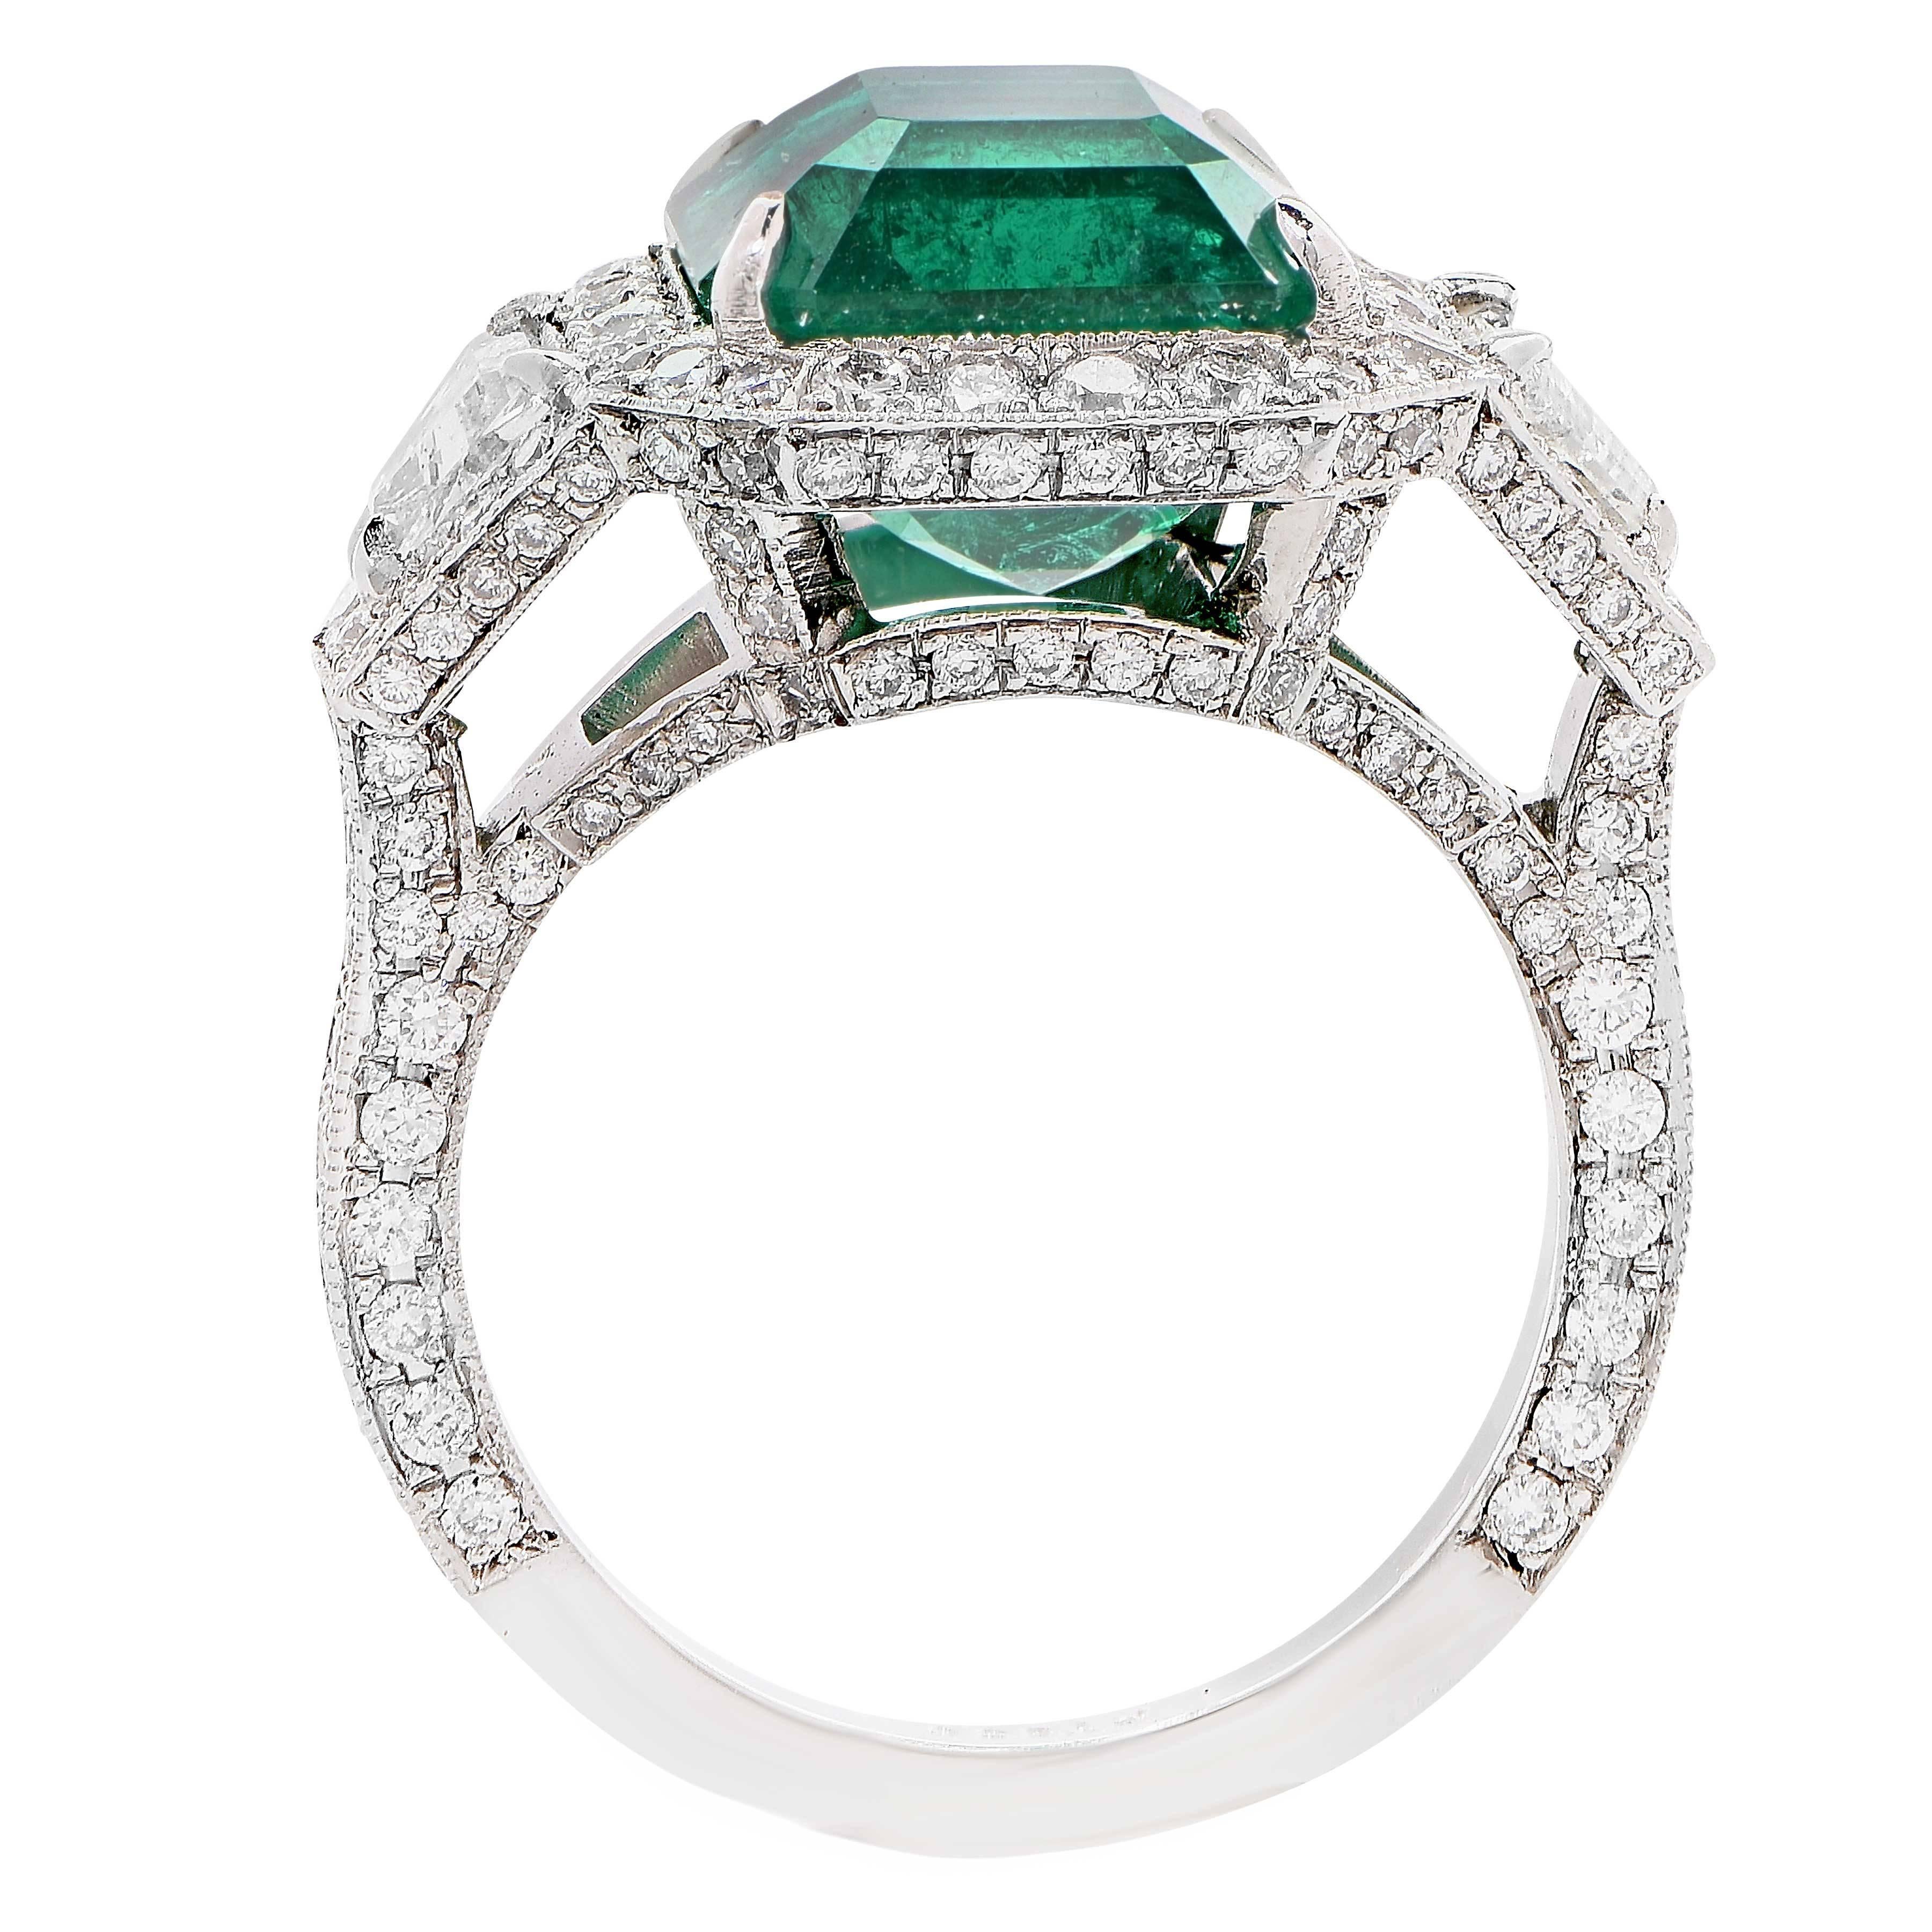 emerald cut emerald ring bay harbor